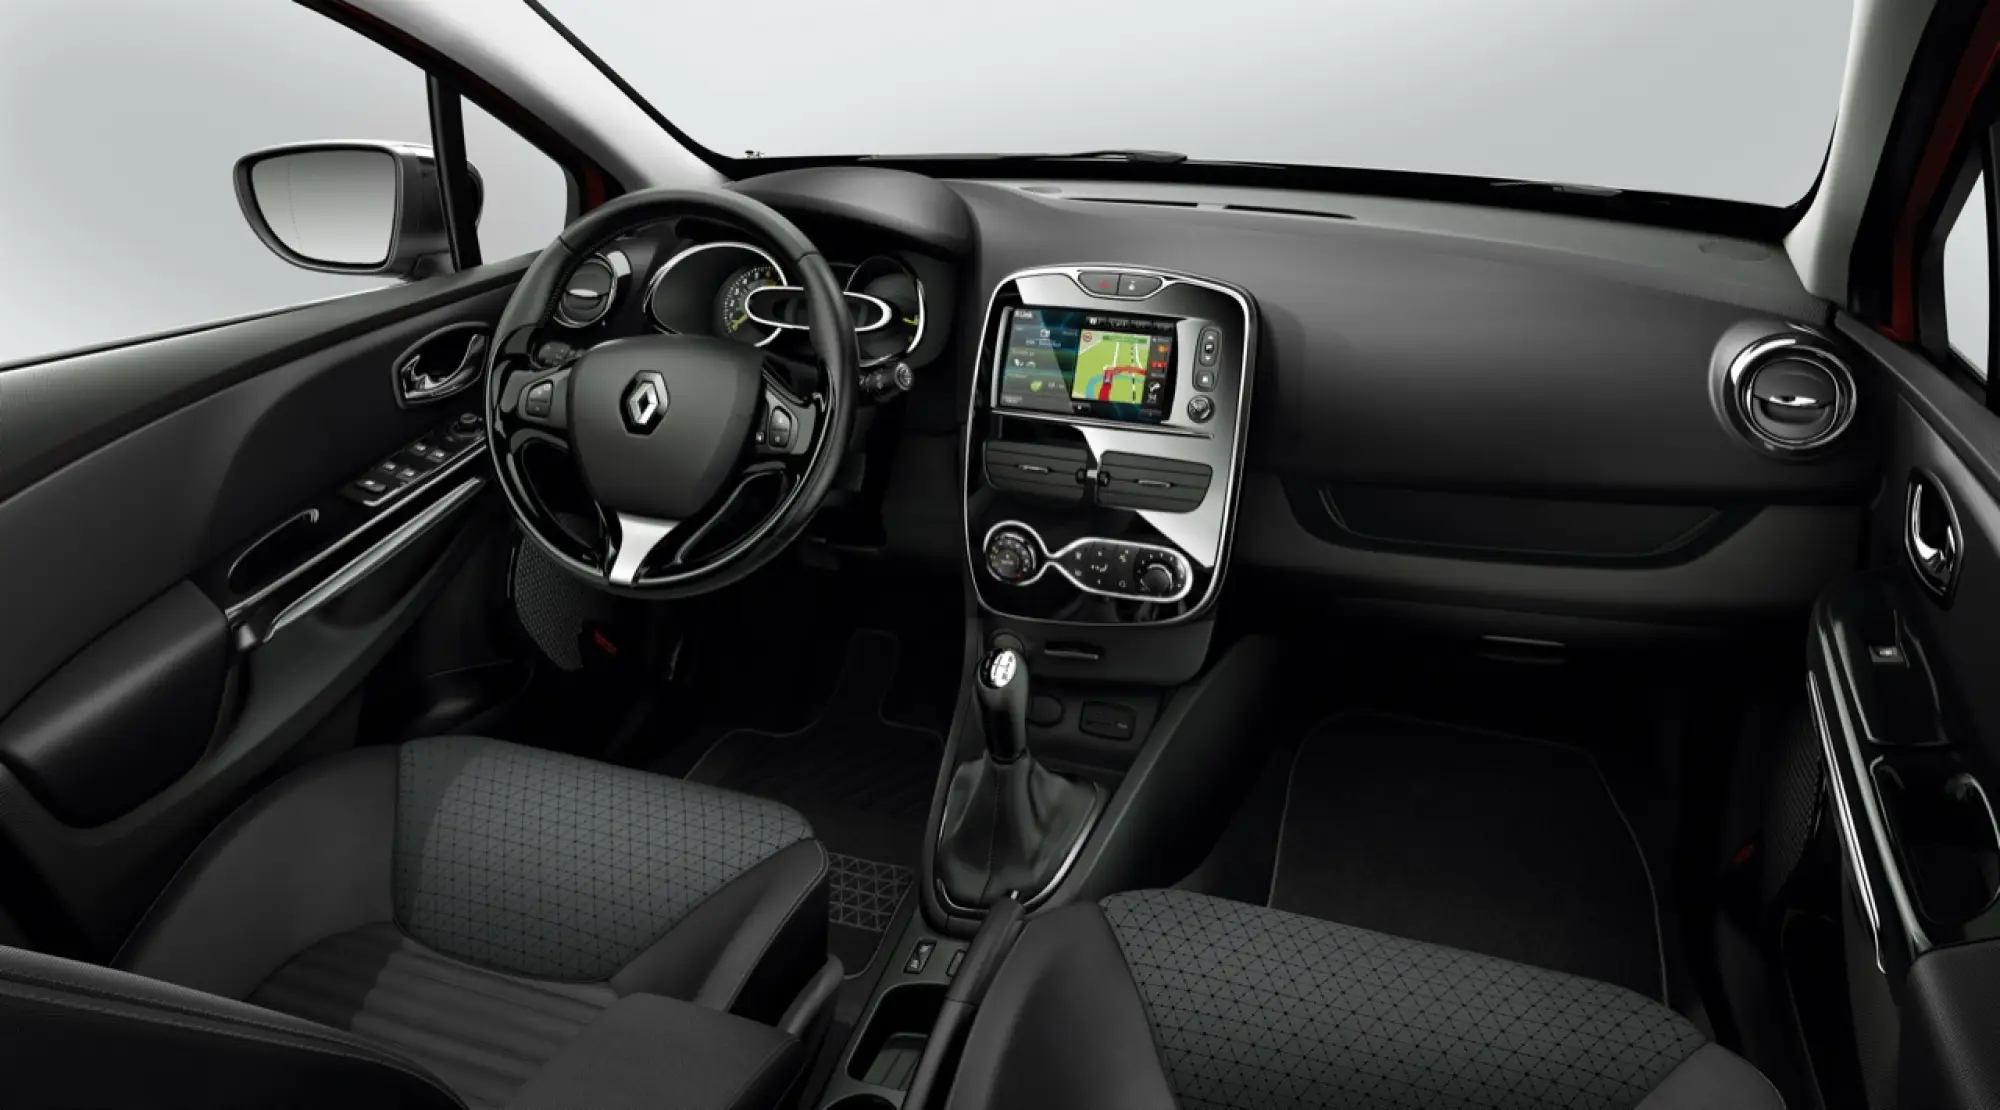 Nuova Renault Clio - The Waiting - 15